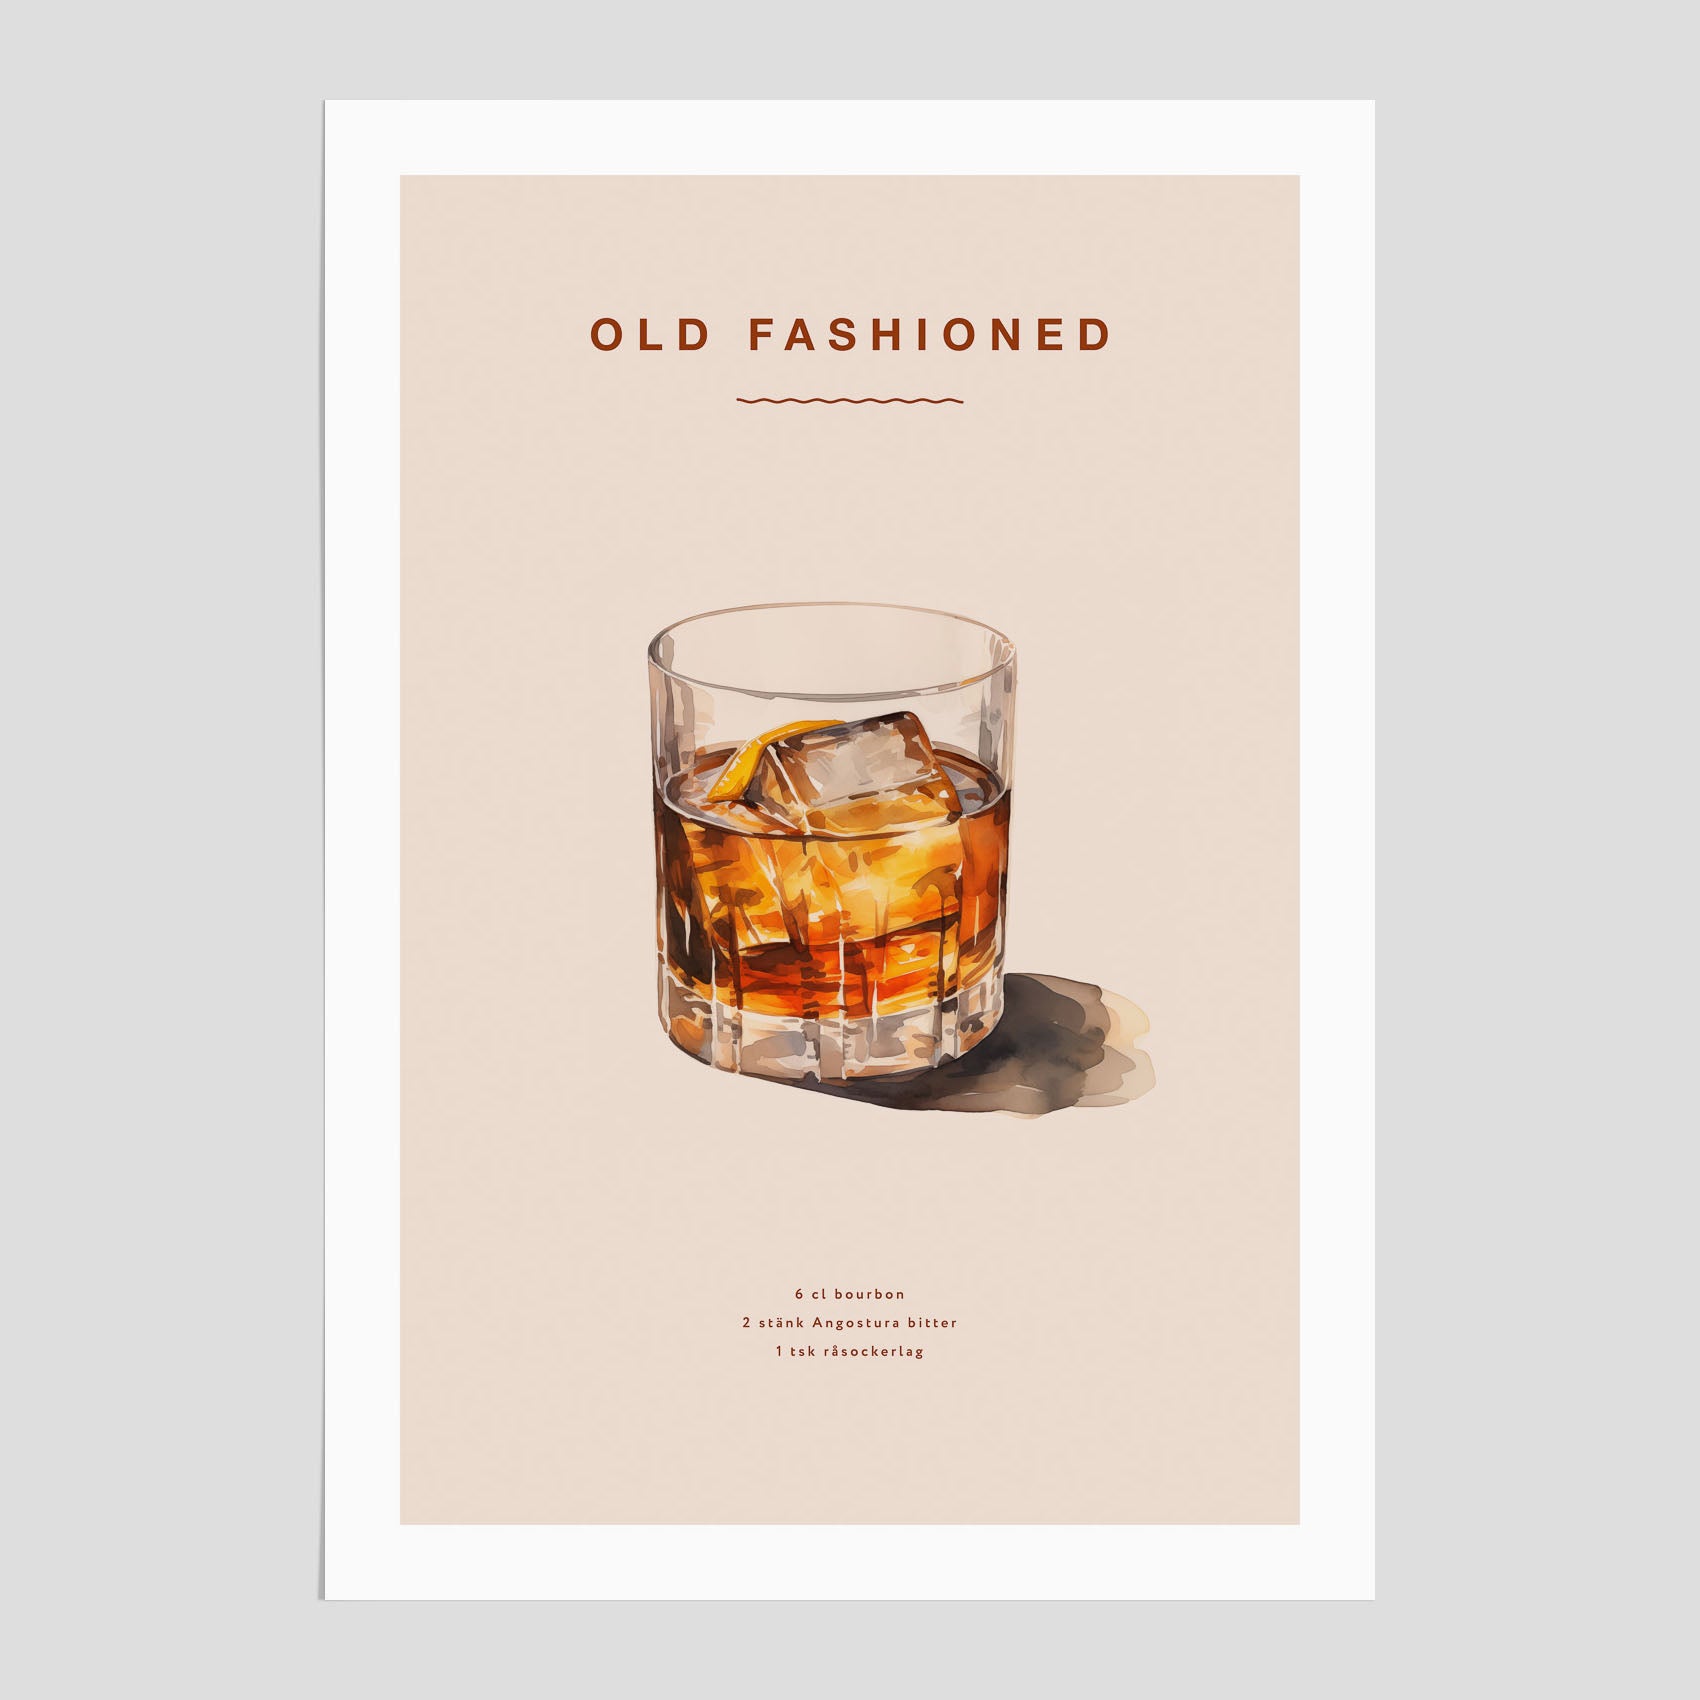 Old Fashioned Poster – Affisch med drink, drinkposter